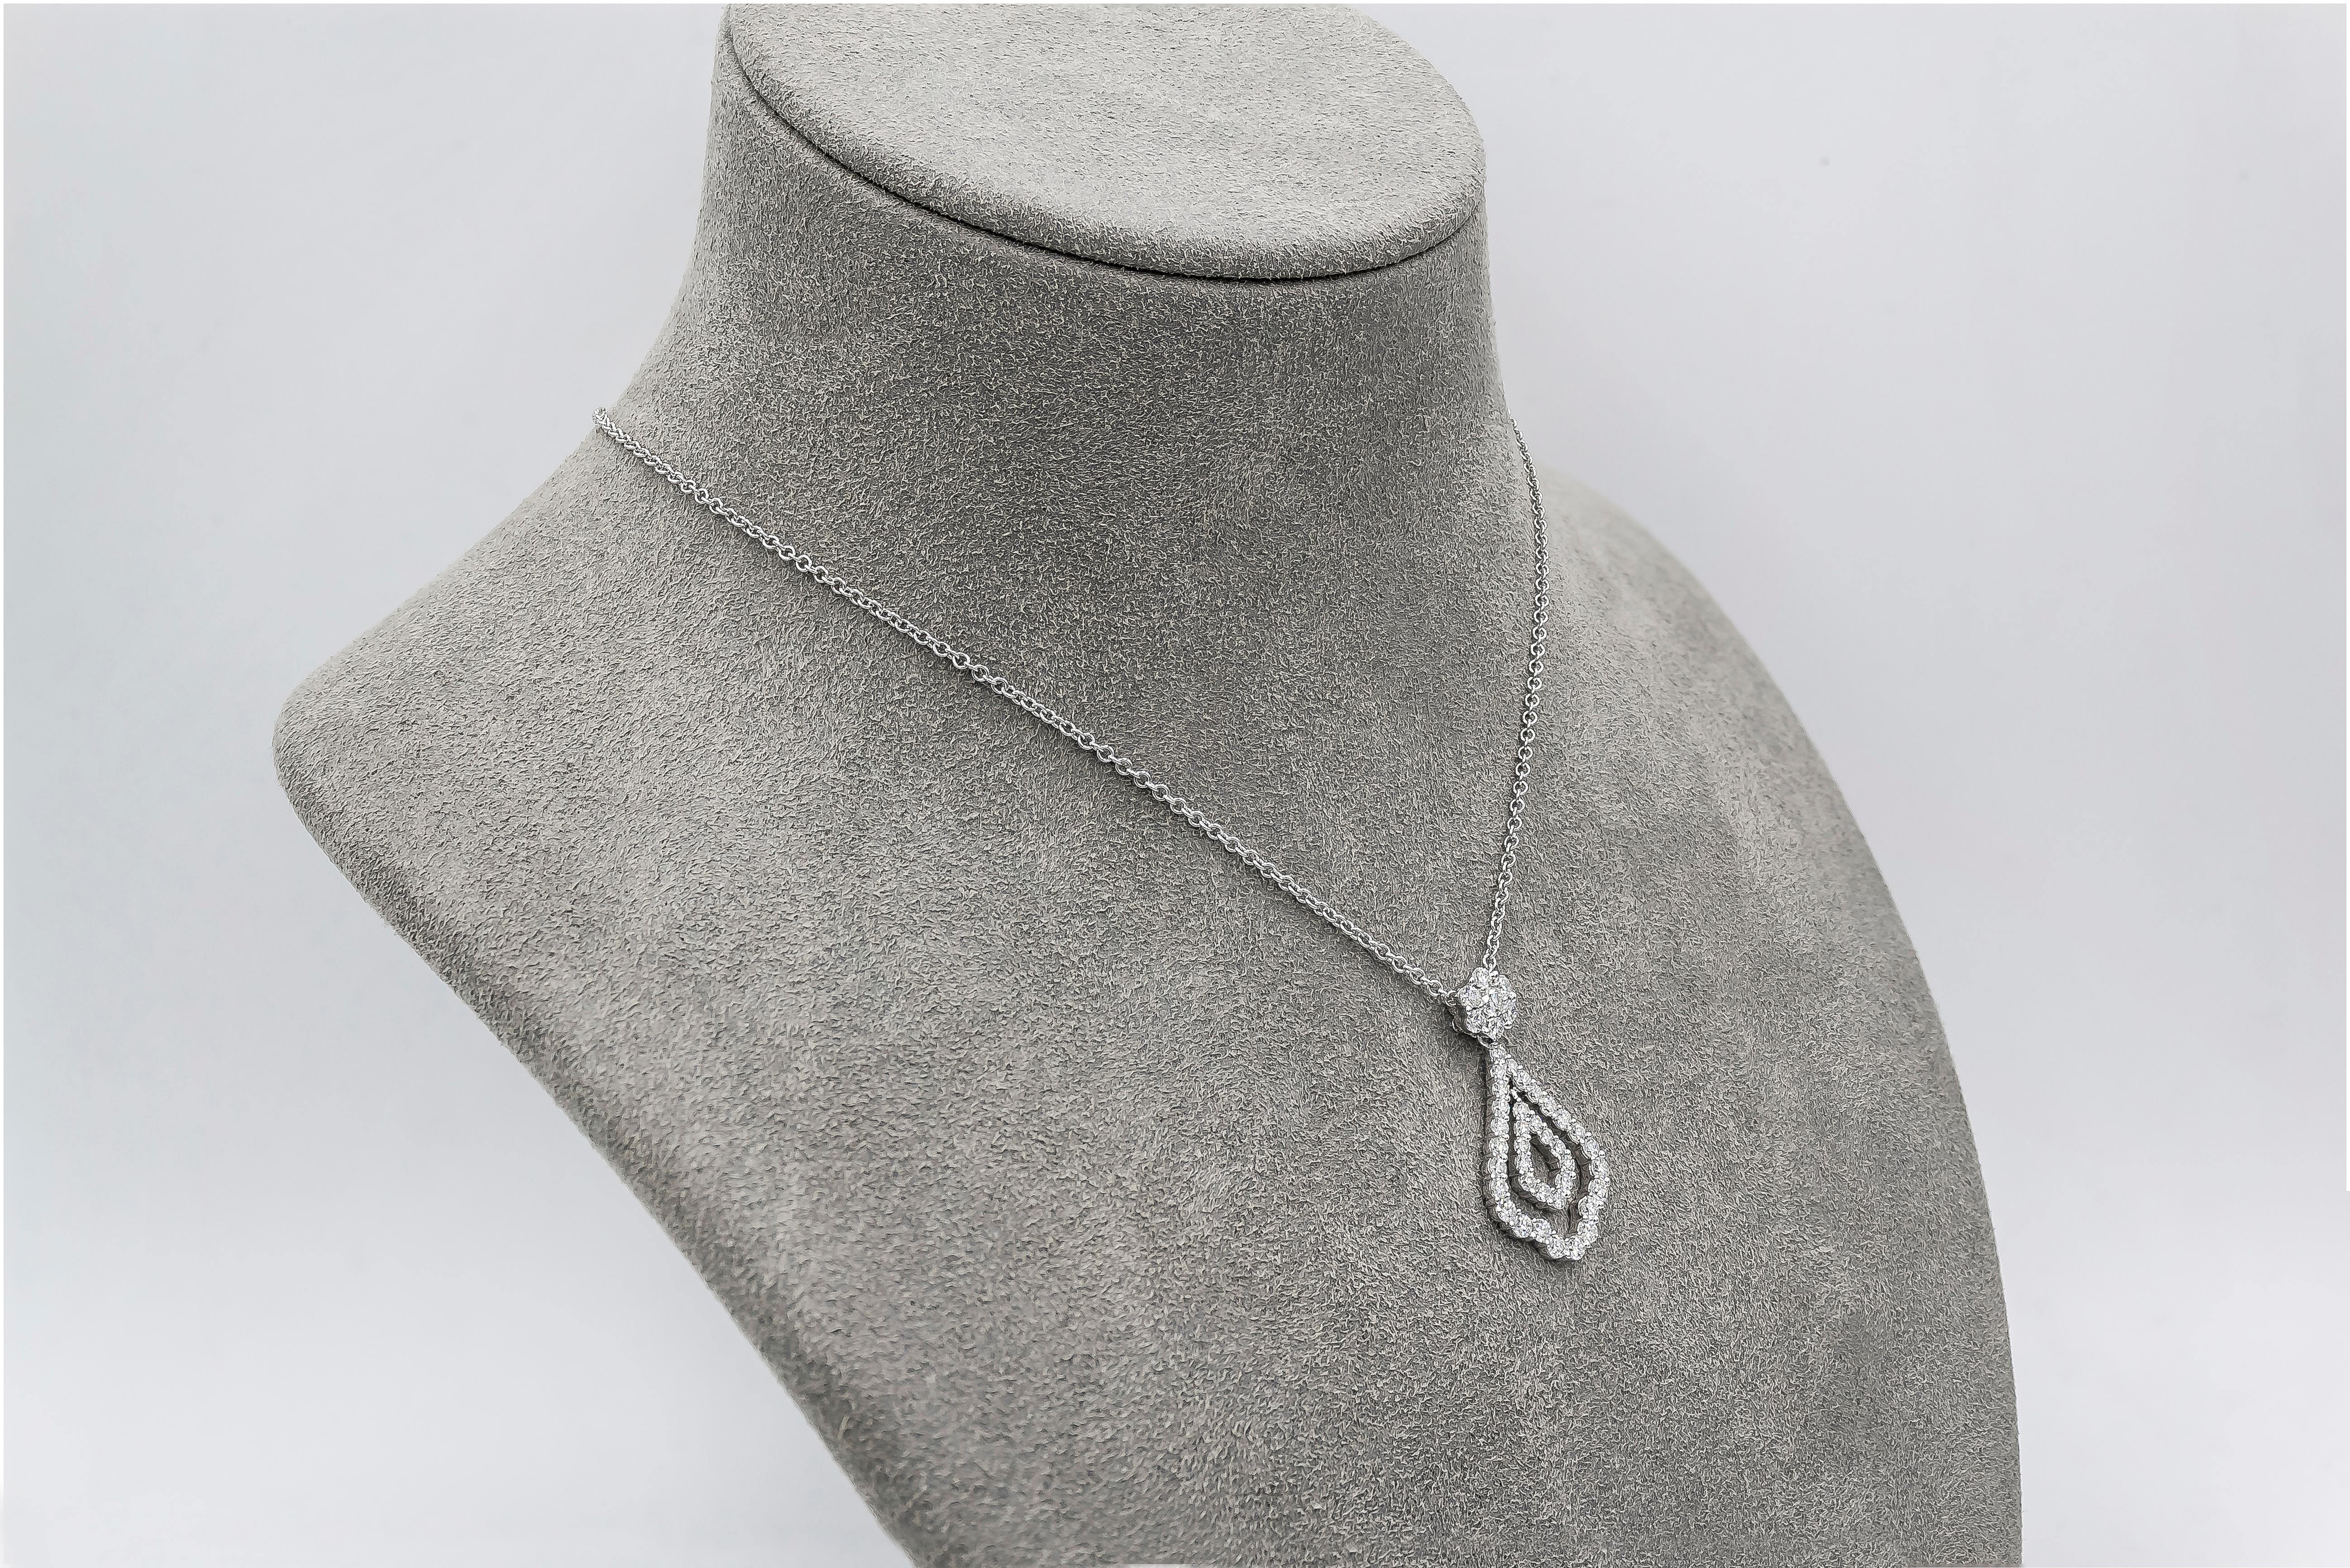 Contemporary Roman Malakov Open-Work Diamond Drop Pendant Necklace